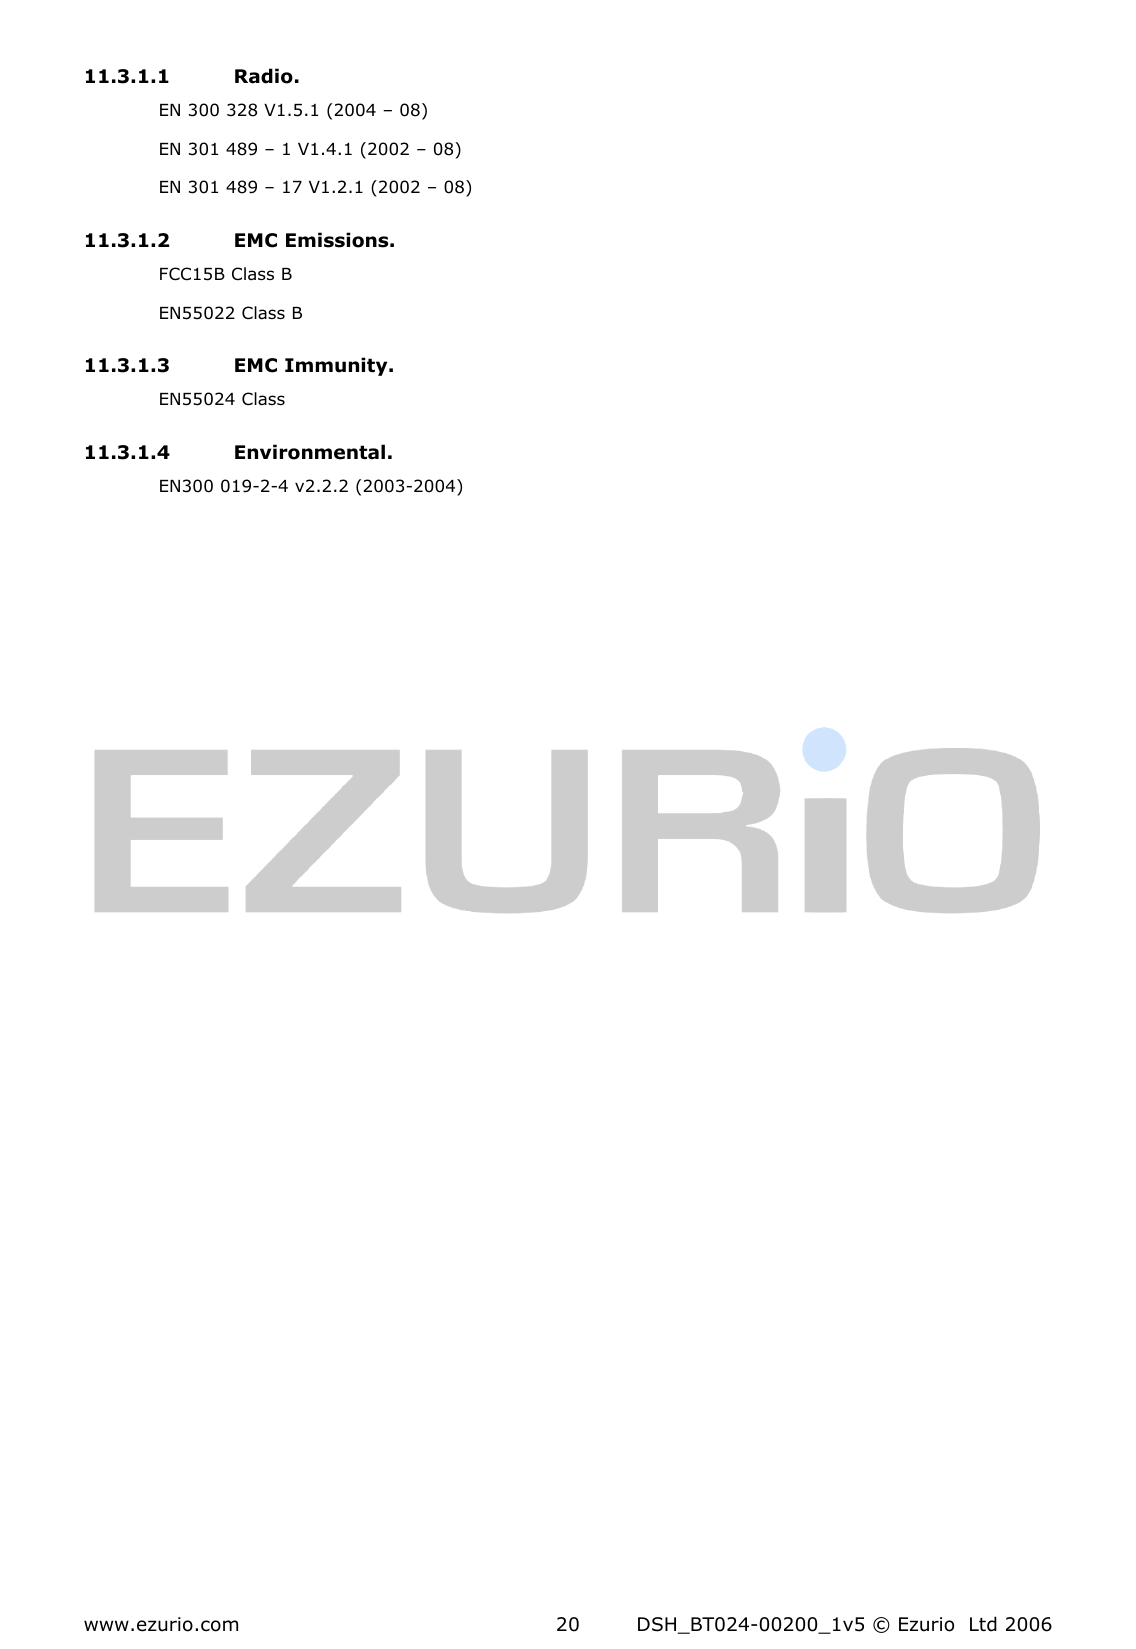  www.ezurio.com  DSH_BT024-00200_1v5 © Ezurio  Ltd 2006 20 11.3.1.1 Radio. EN 300 328 V1.5.1 (2004 – 08) EN 301 489 – 1 V1.4.1 (2002 – 08) EN 301 489 – 17 V1.2.1 (2002 – 08) 11.3.1.2 EMC Emissions. FCC15B Class B EN55022 Class B 11.3.1.3 EMC Immunity. EN55024 Class 11.3.1.4 Environmental. EN300 019-2-4 v2.2.2 (2003-2004) 